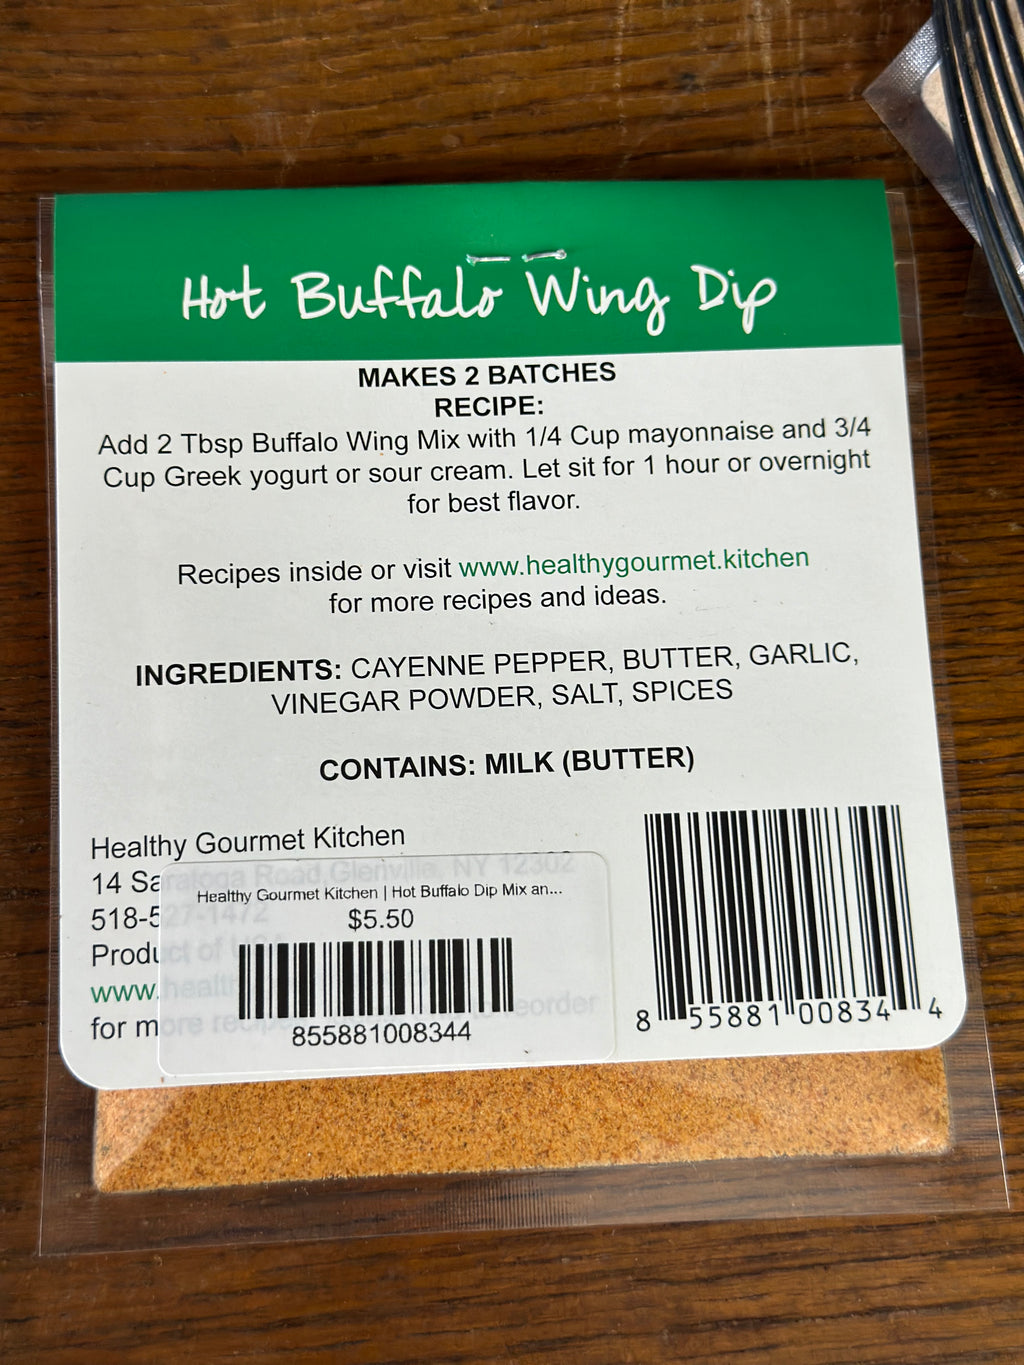 Healthy Gourmet Kitchen | Hot Buffalo Dip Mix and Seasoning Blend [.9 oz]